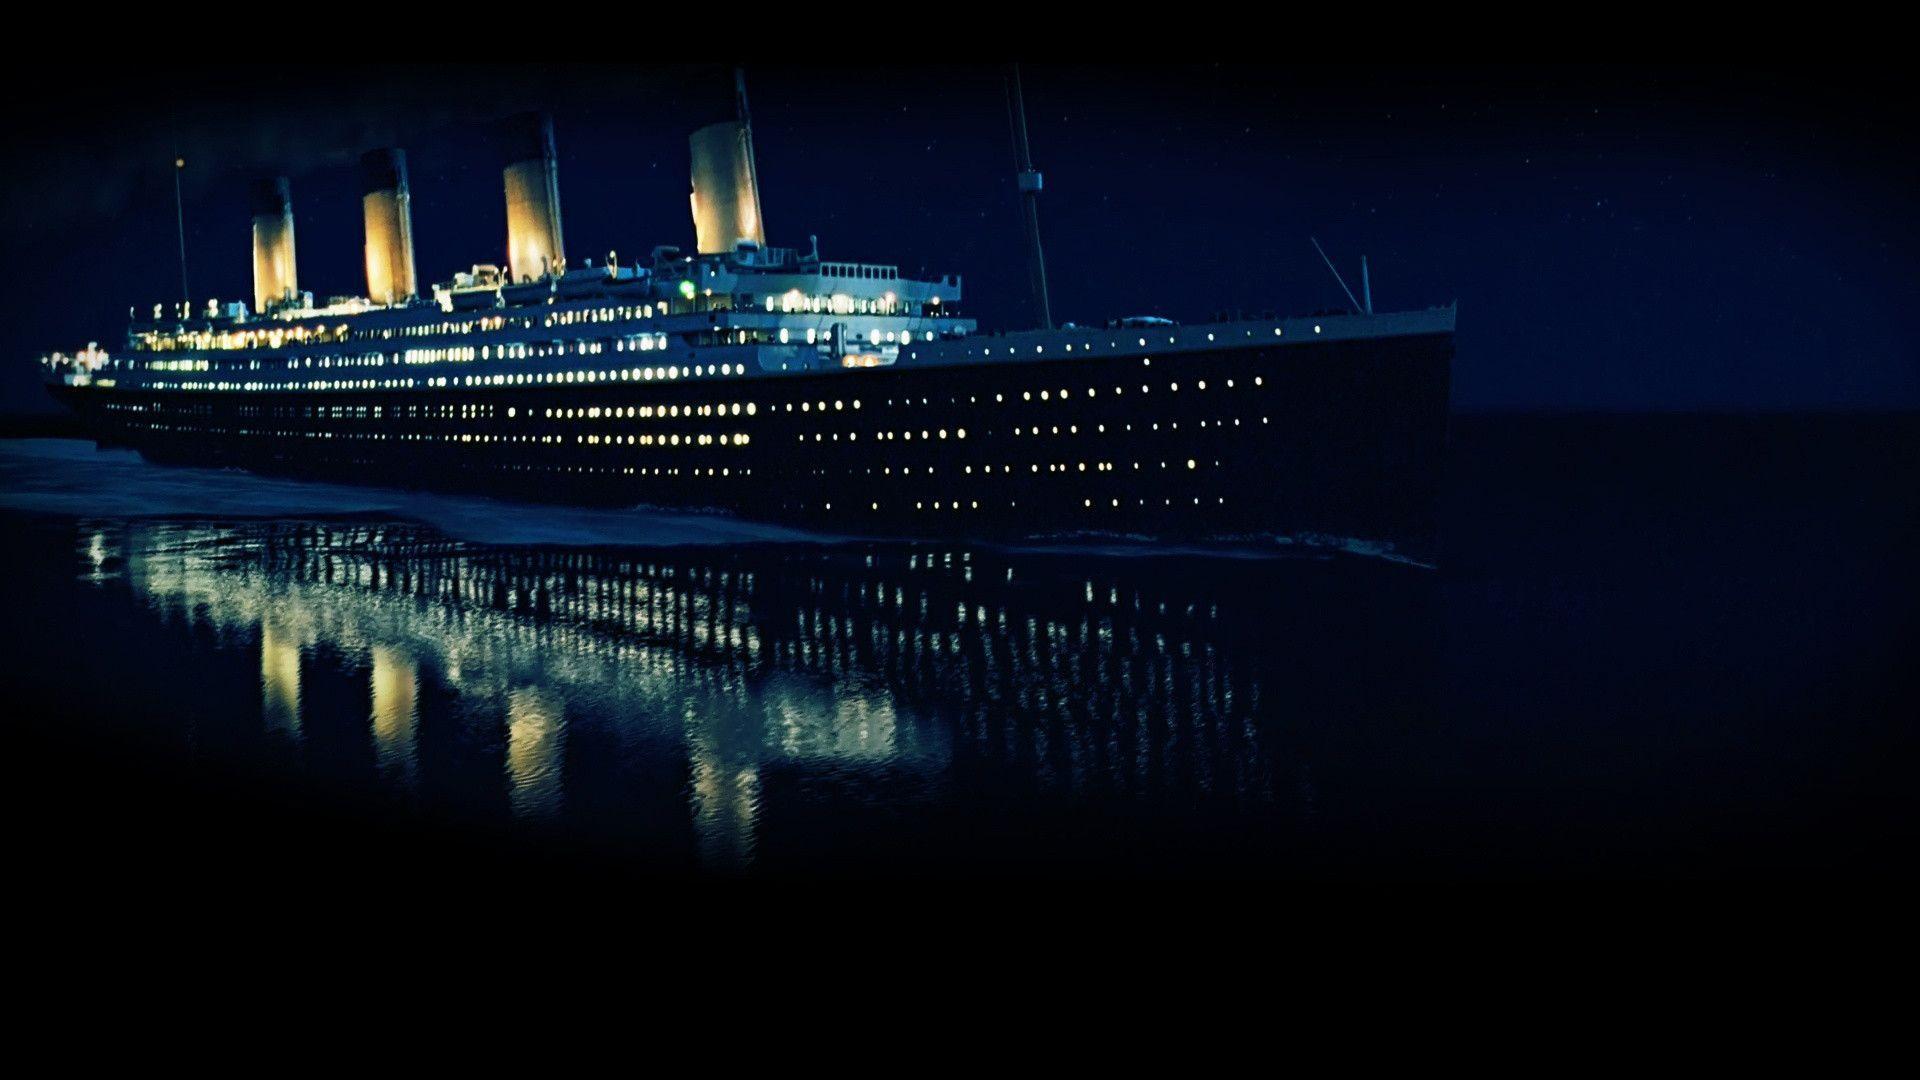 Titanic 3D Wallpaper. HD WallpaperWindows 8 HQ Wallpaper